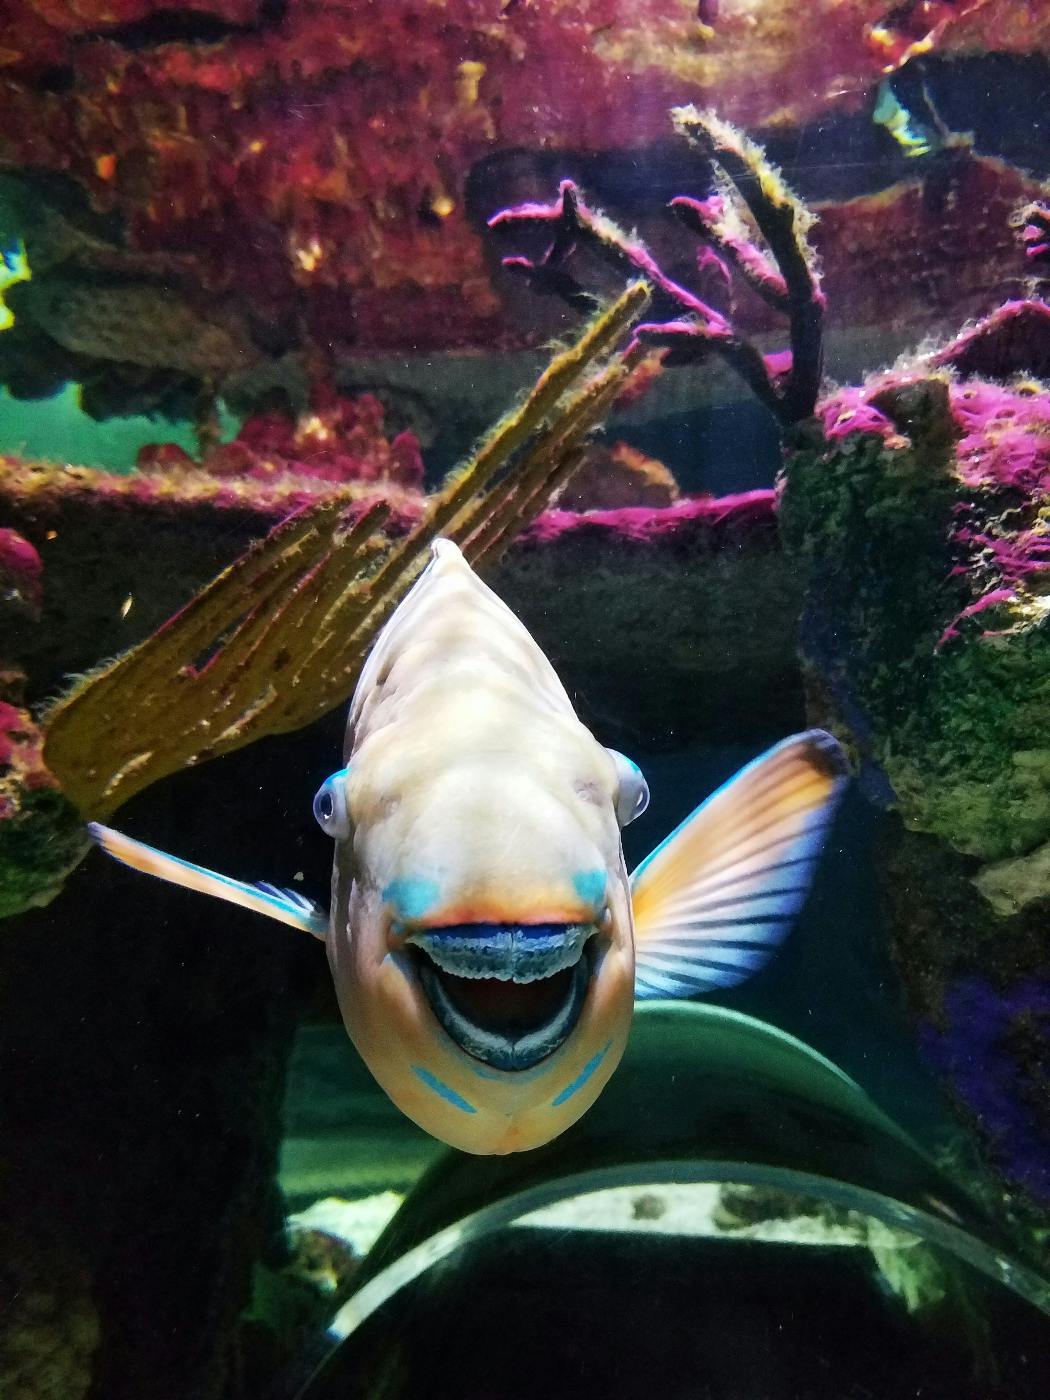 A parrot fish looking at the camera